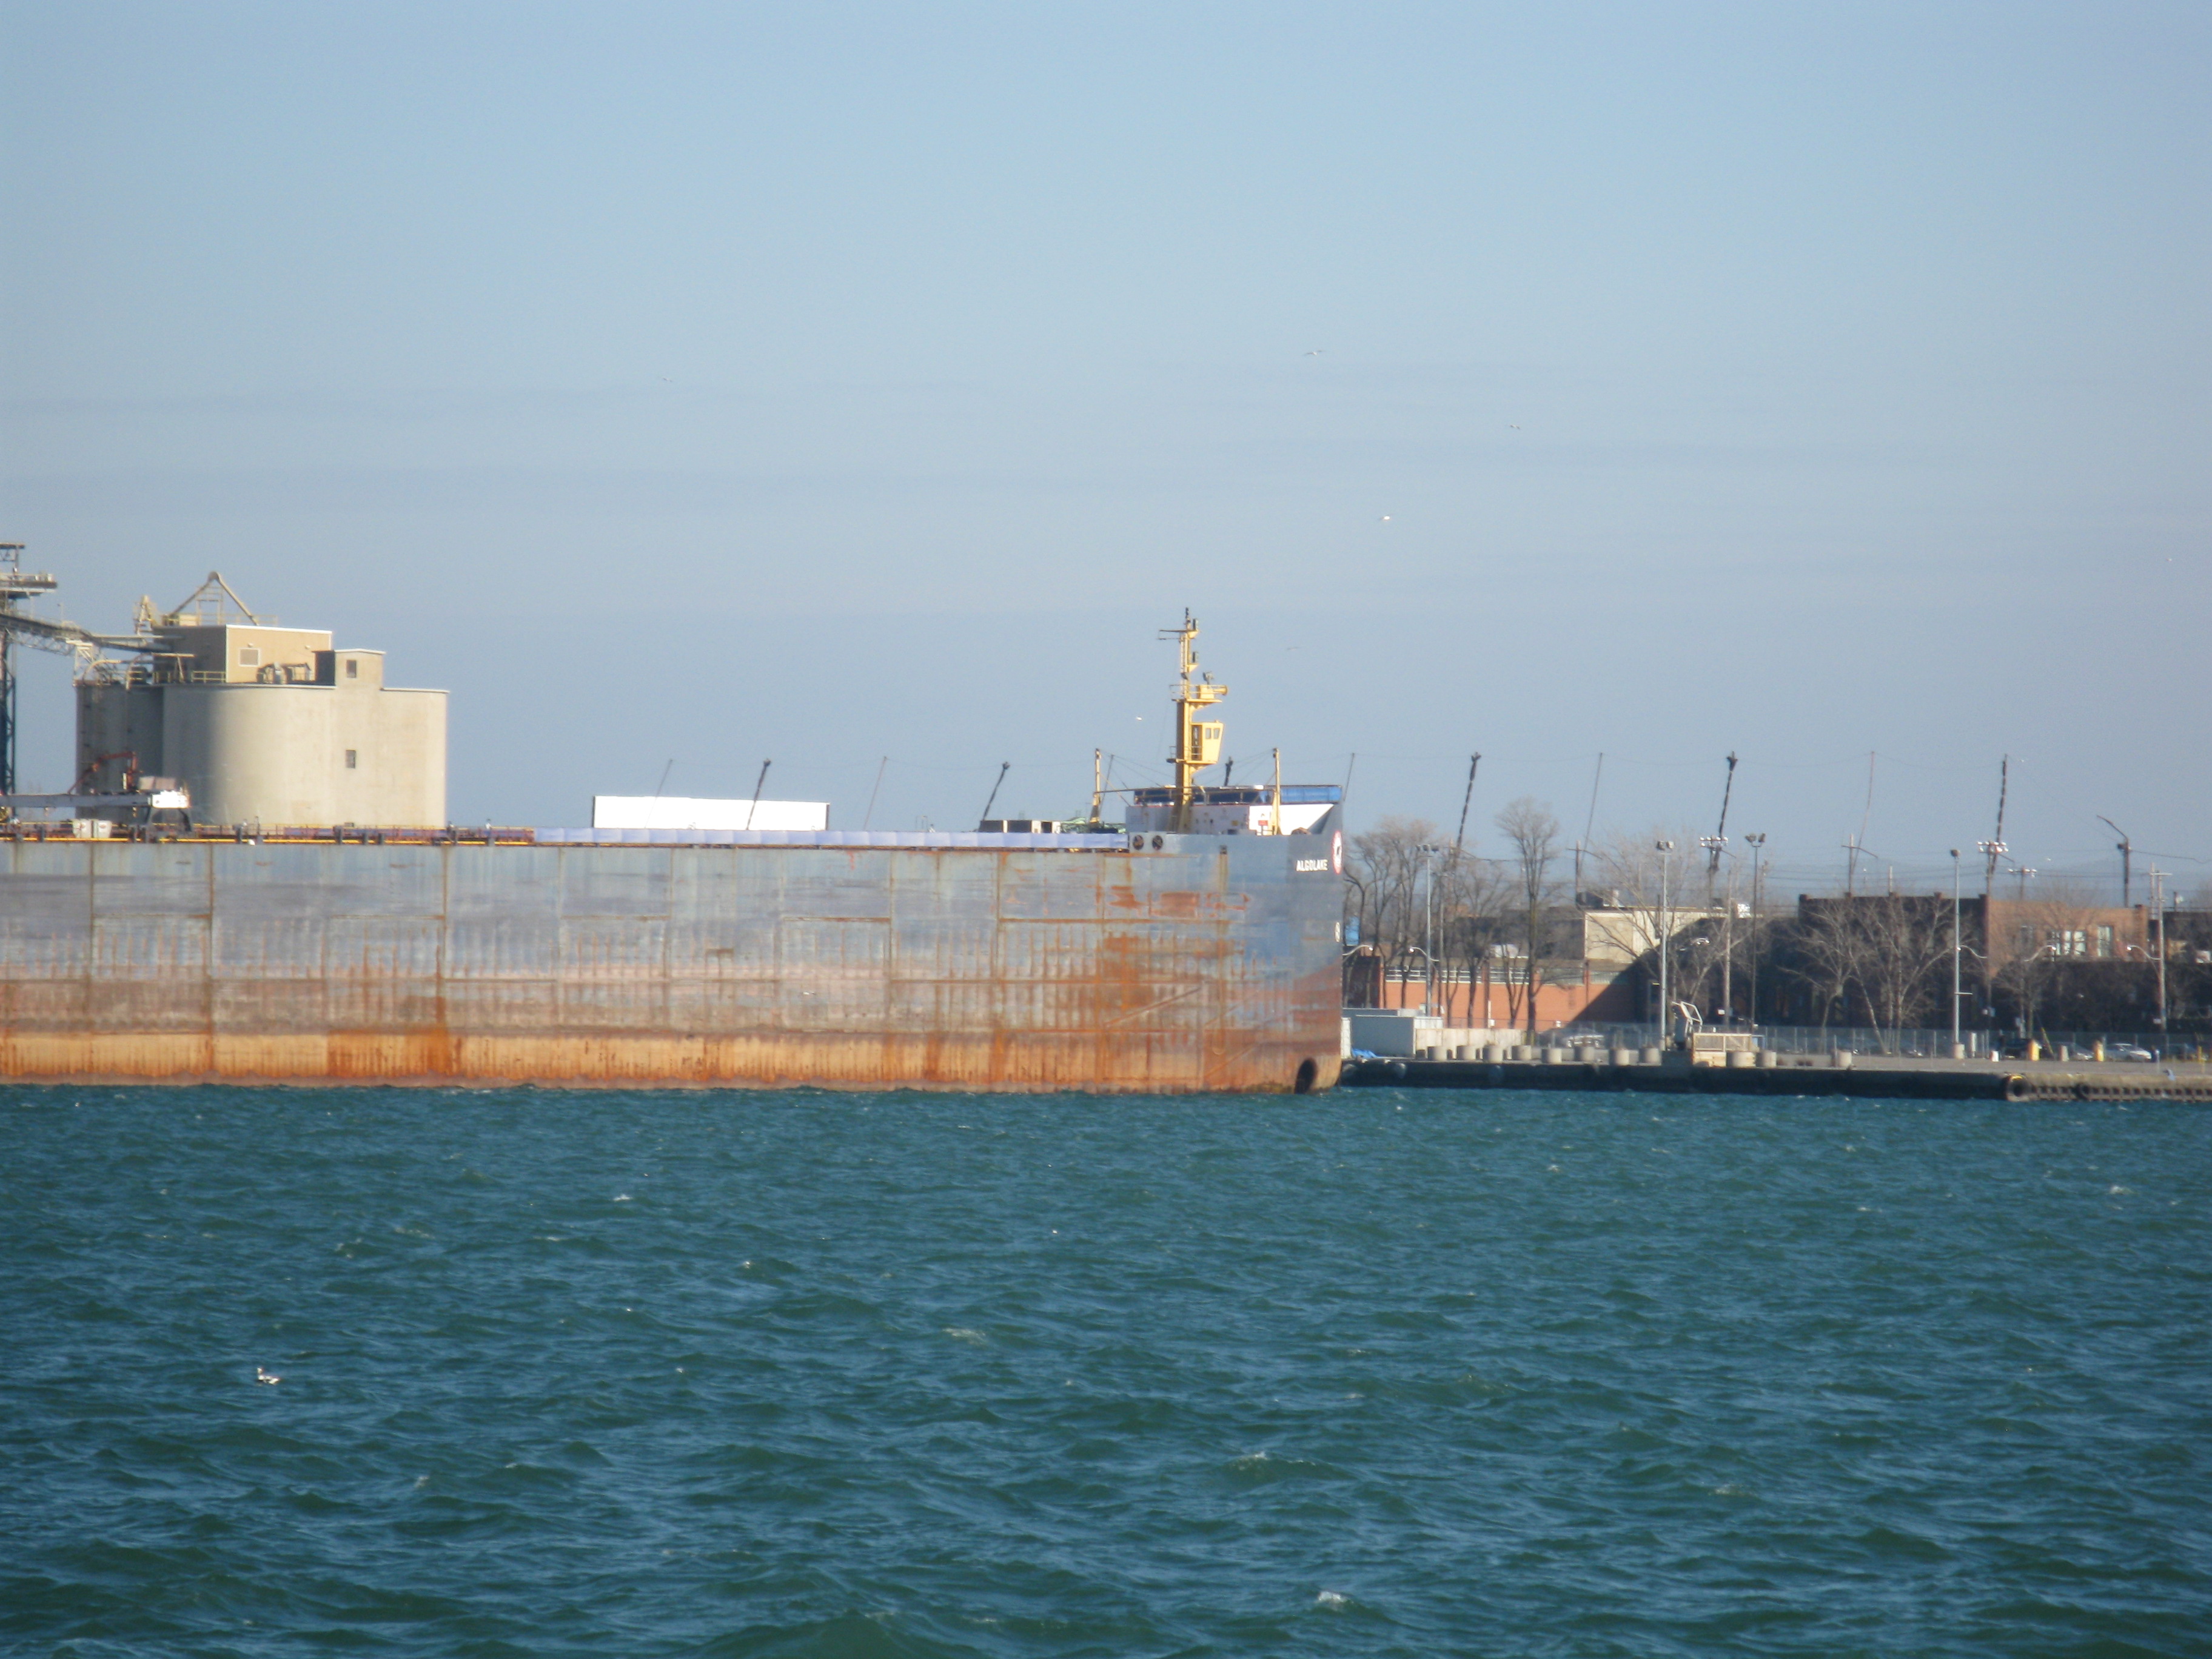 Lake freighter algolake, moored in toronto, 2013 01 16 -d.jpg photo